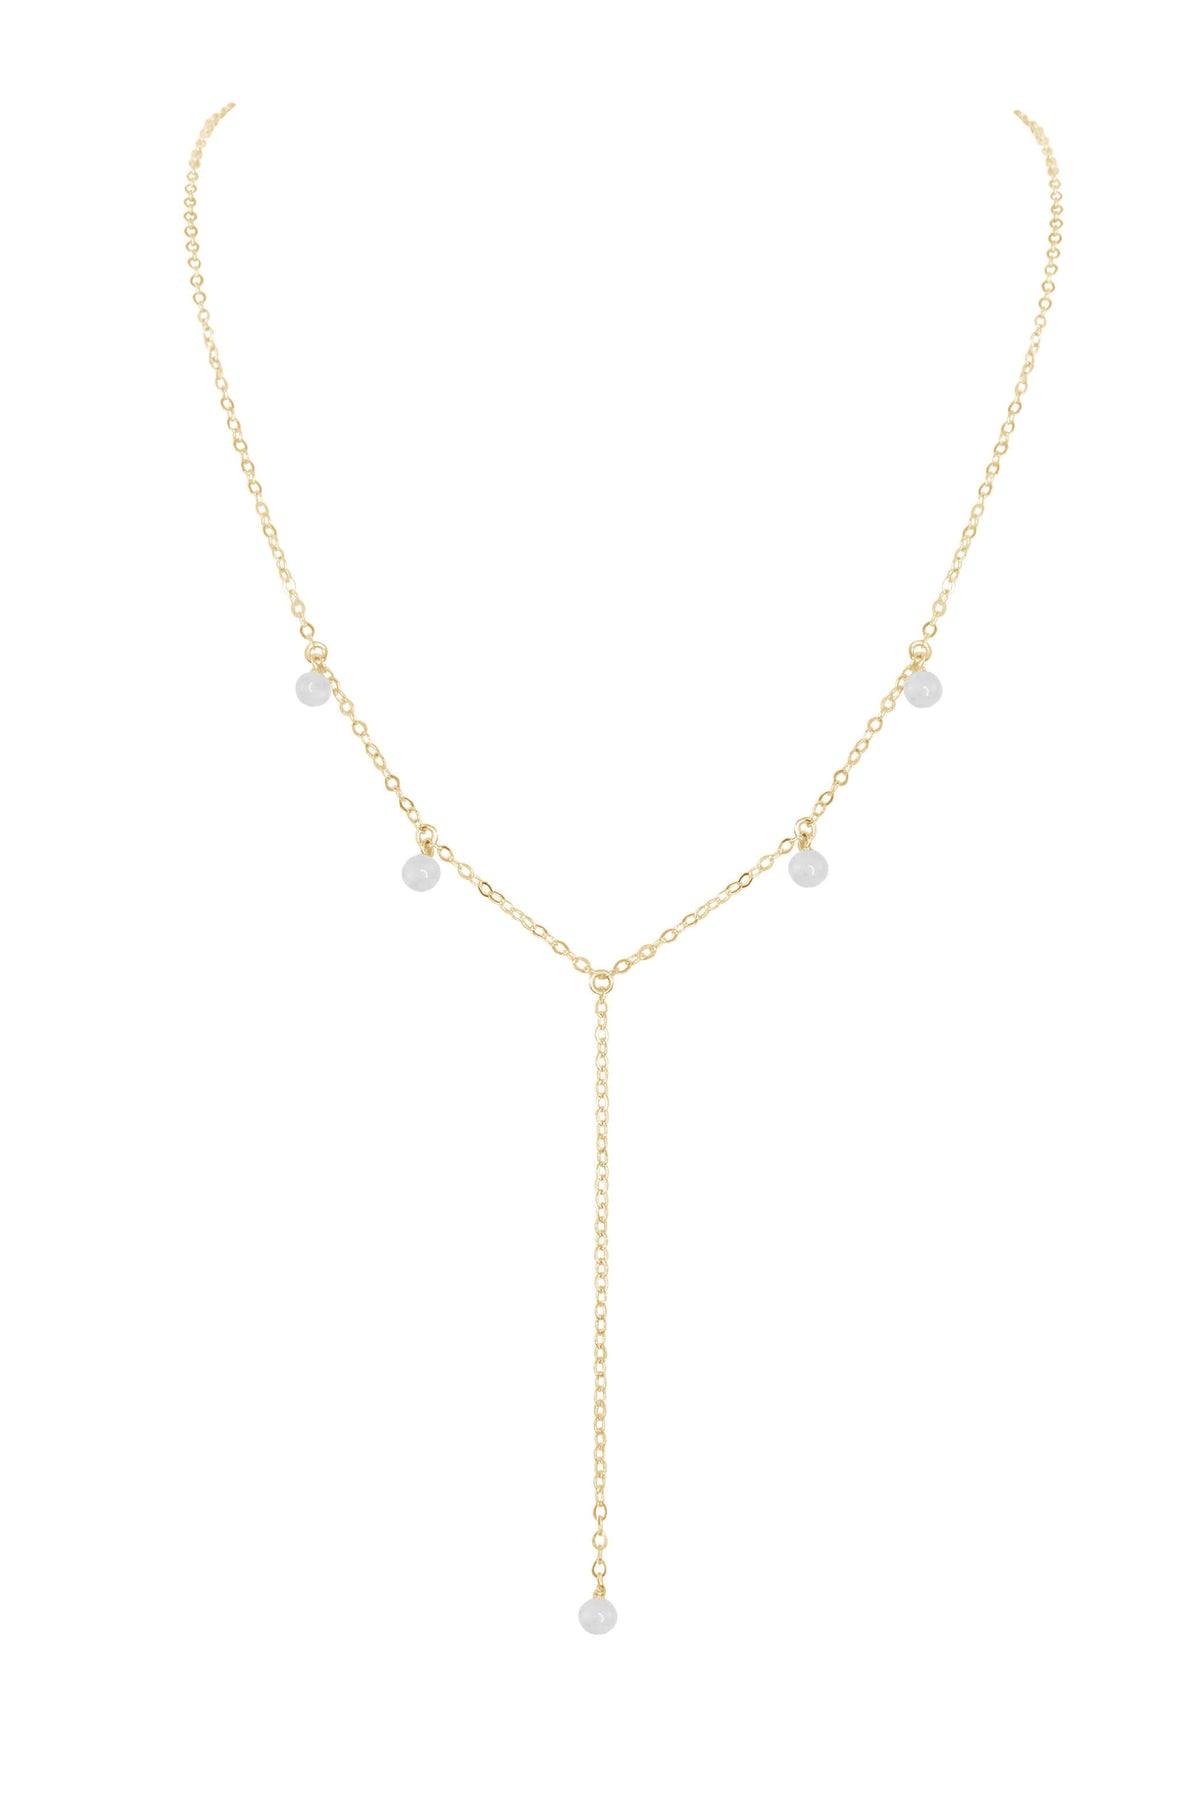 Boho Y Necklace - Selenite - 14K Gold Fill - Luna Tide Handmade Jewellery